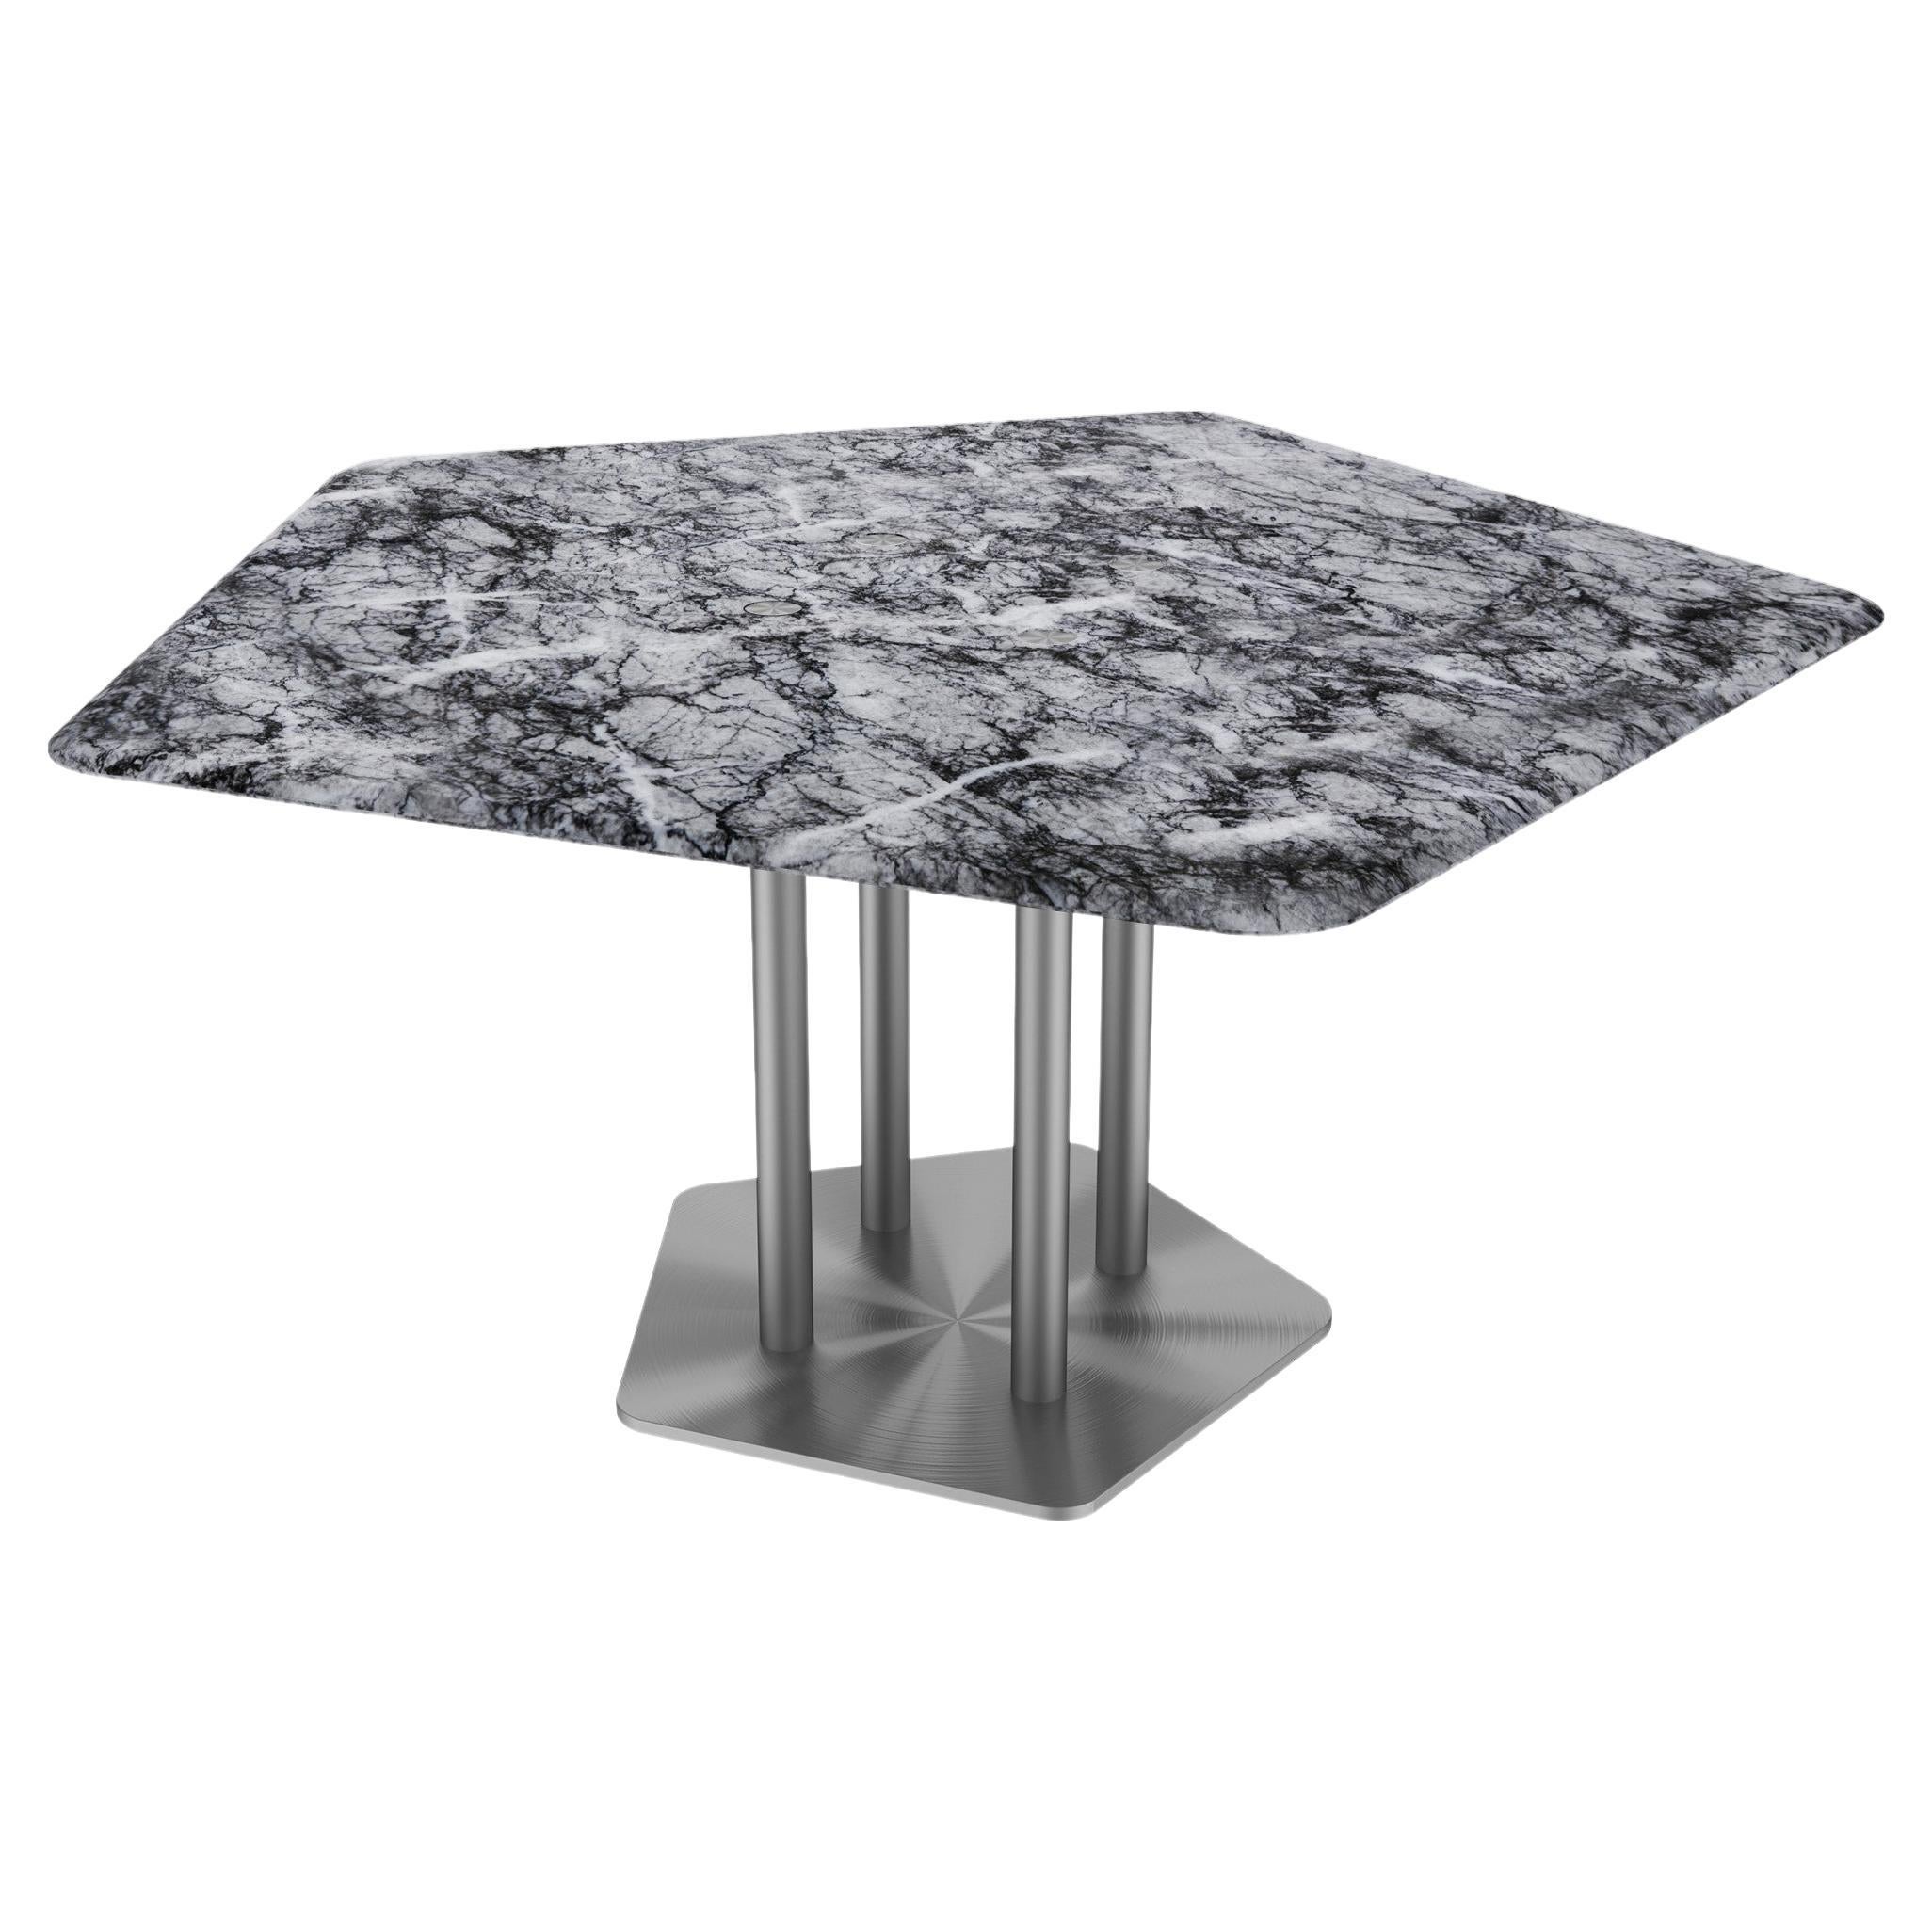 NORDST ELI Dining Table, Italian Grey Rain Marble, Danish Modern Design, New